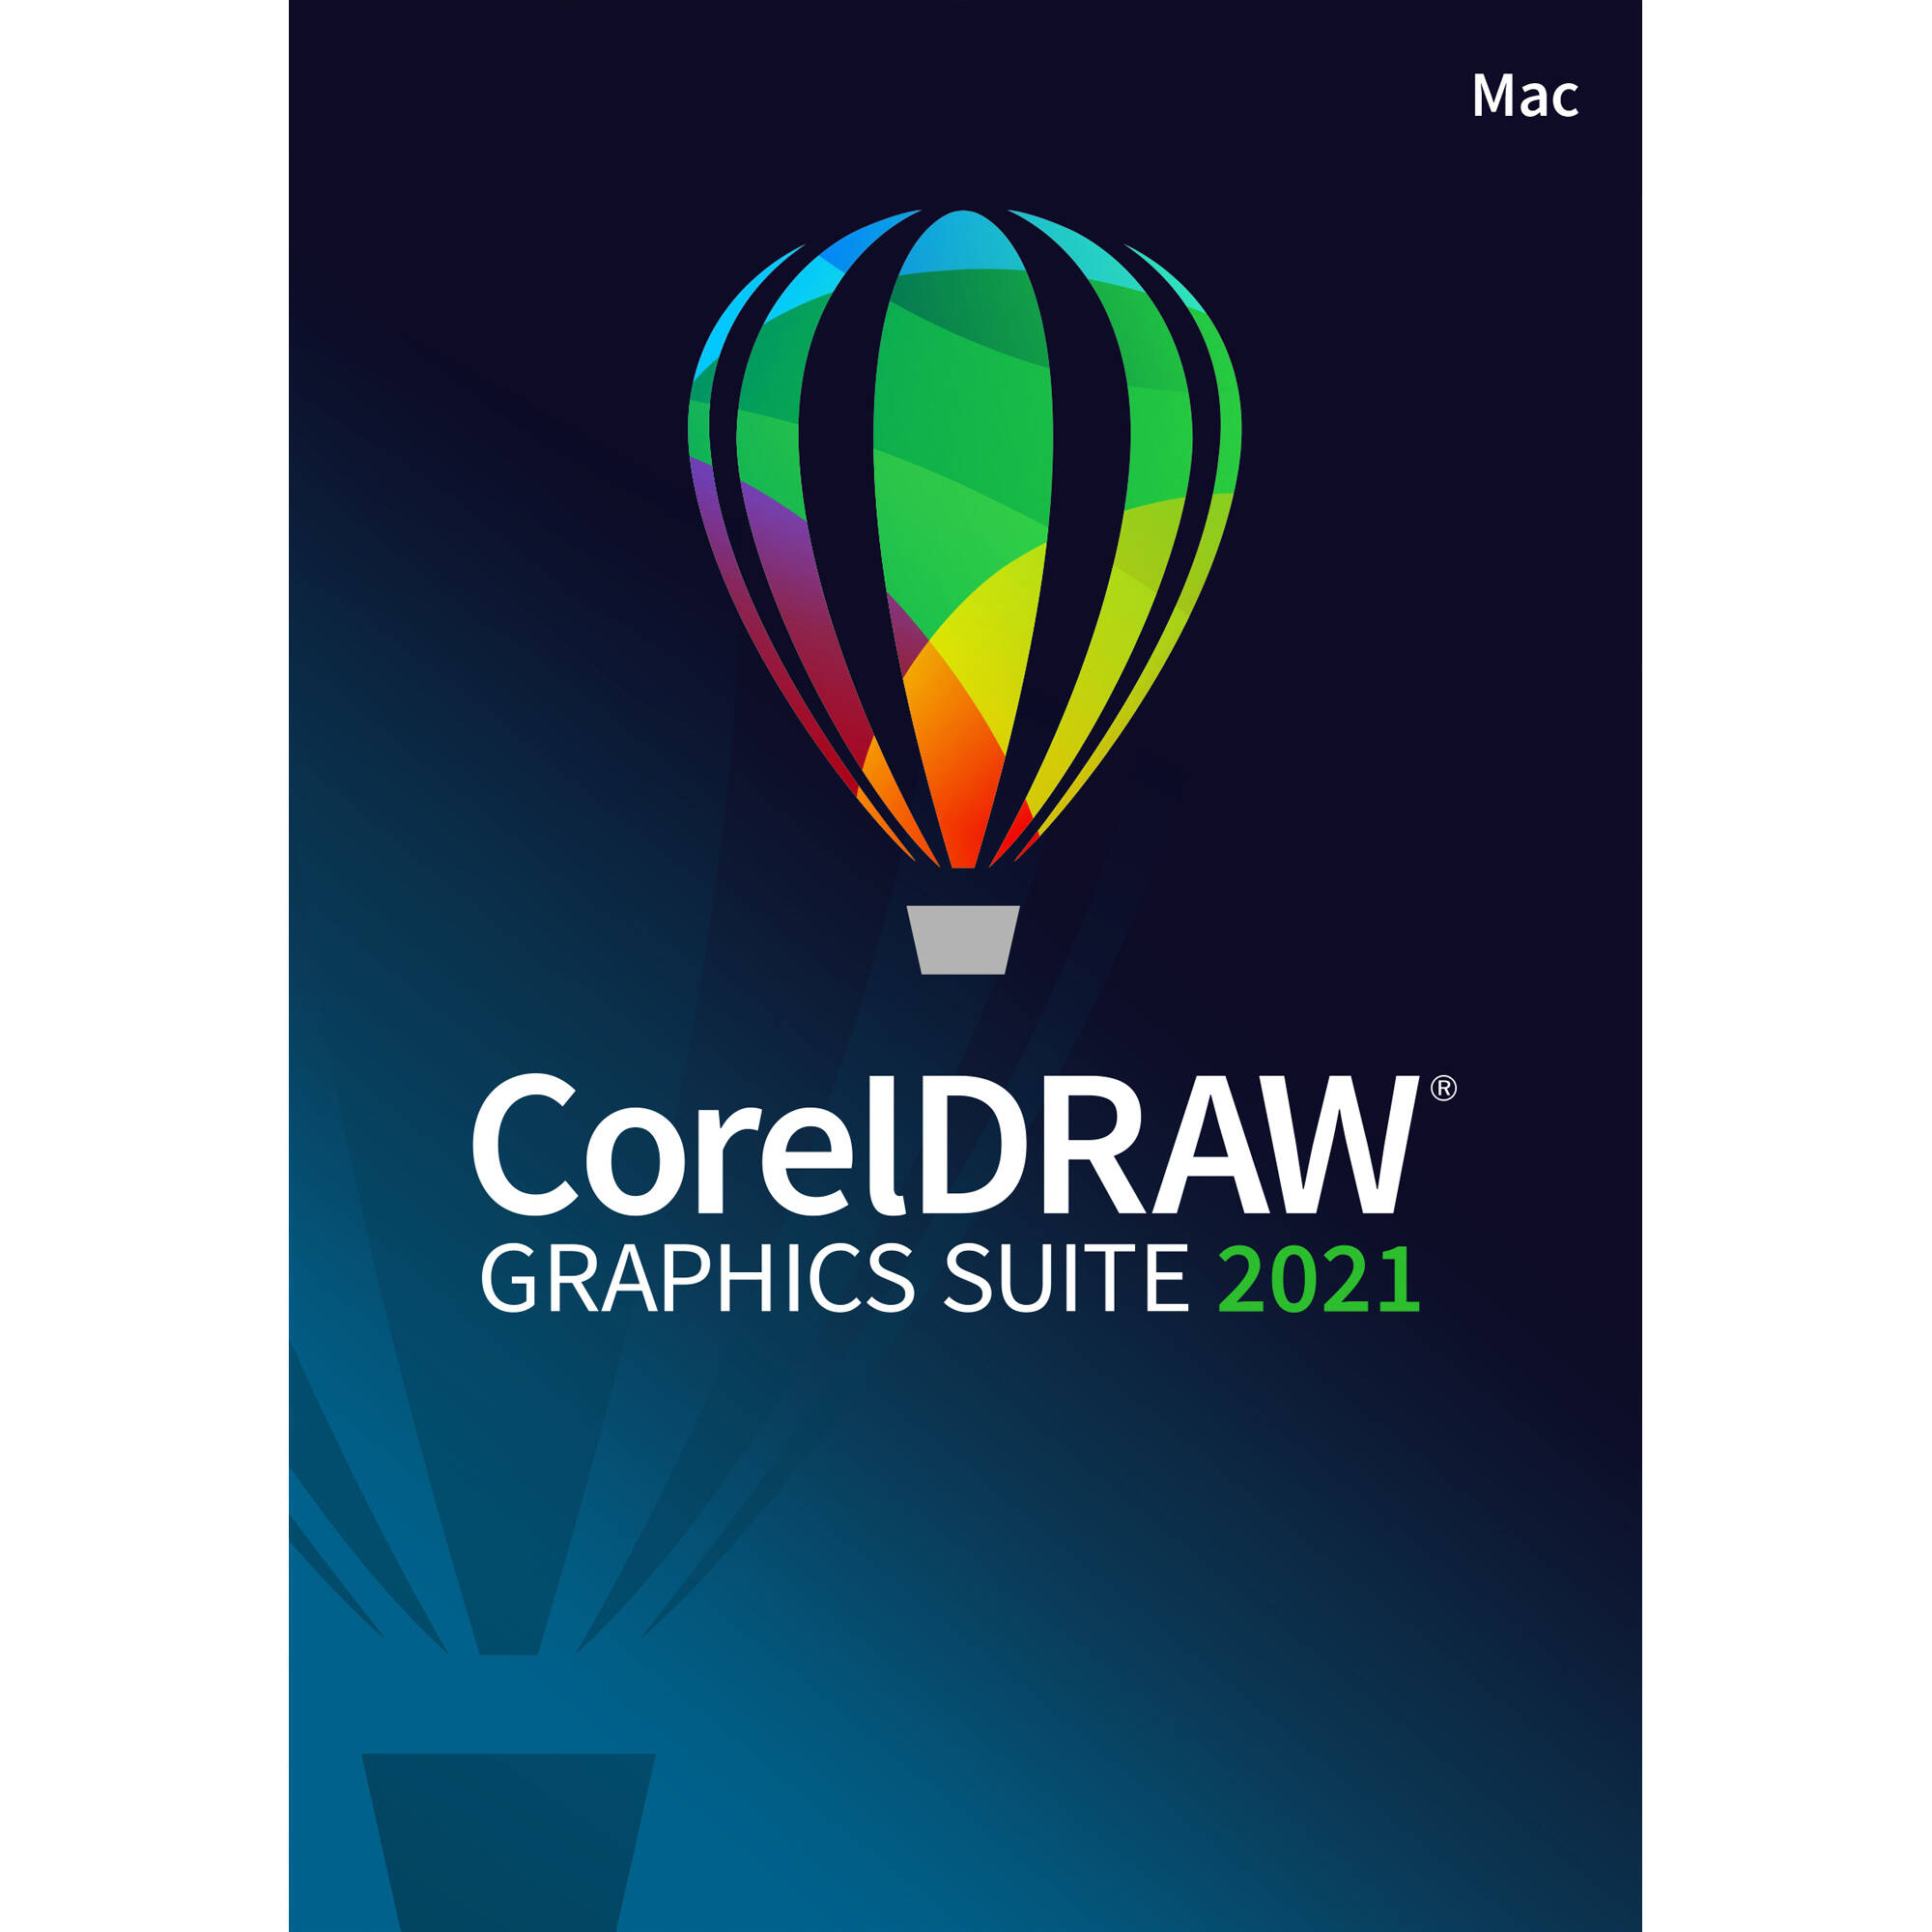 Corel CorelDRAW Graphics Suite 2021 for Mac (Boxed / Education Edition / Perpetual License)